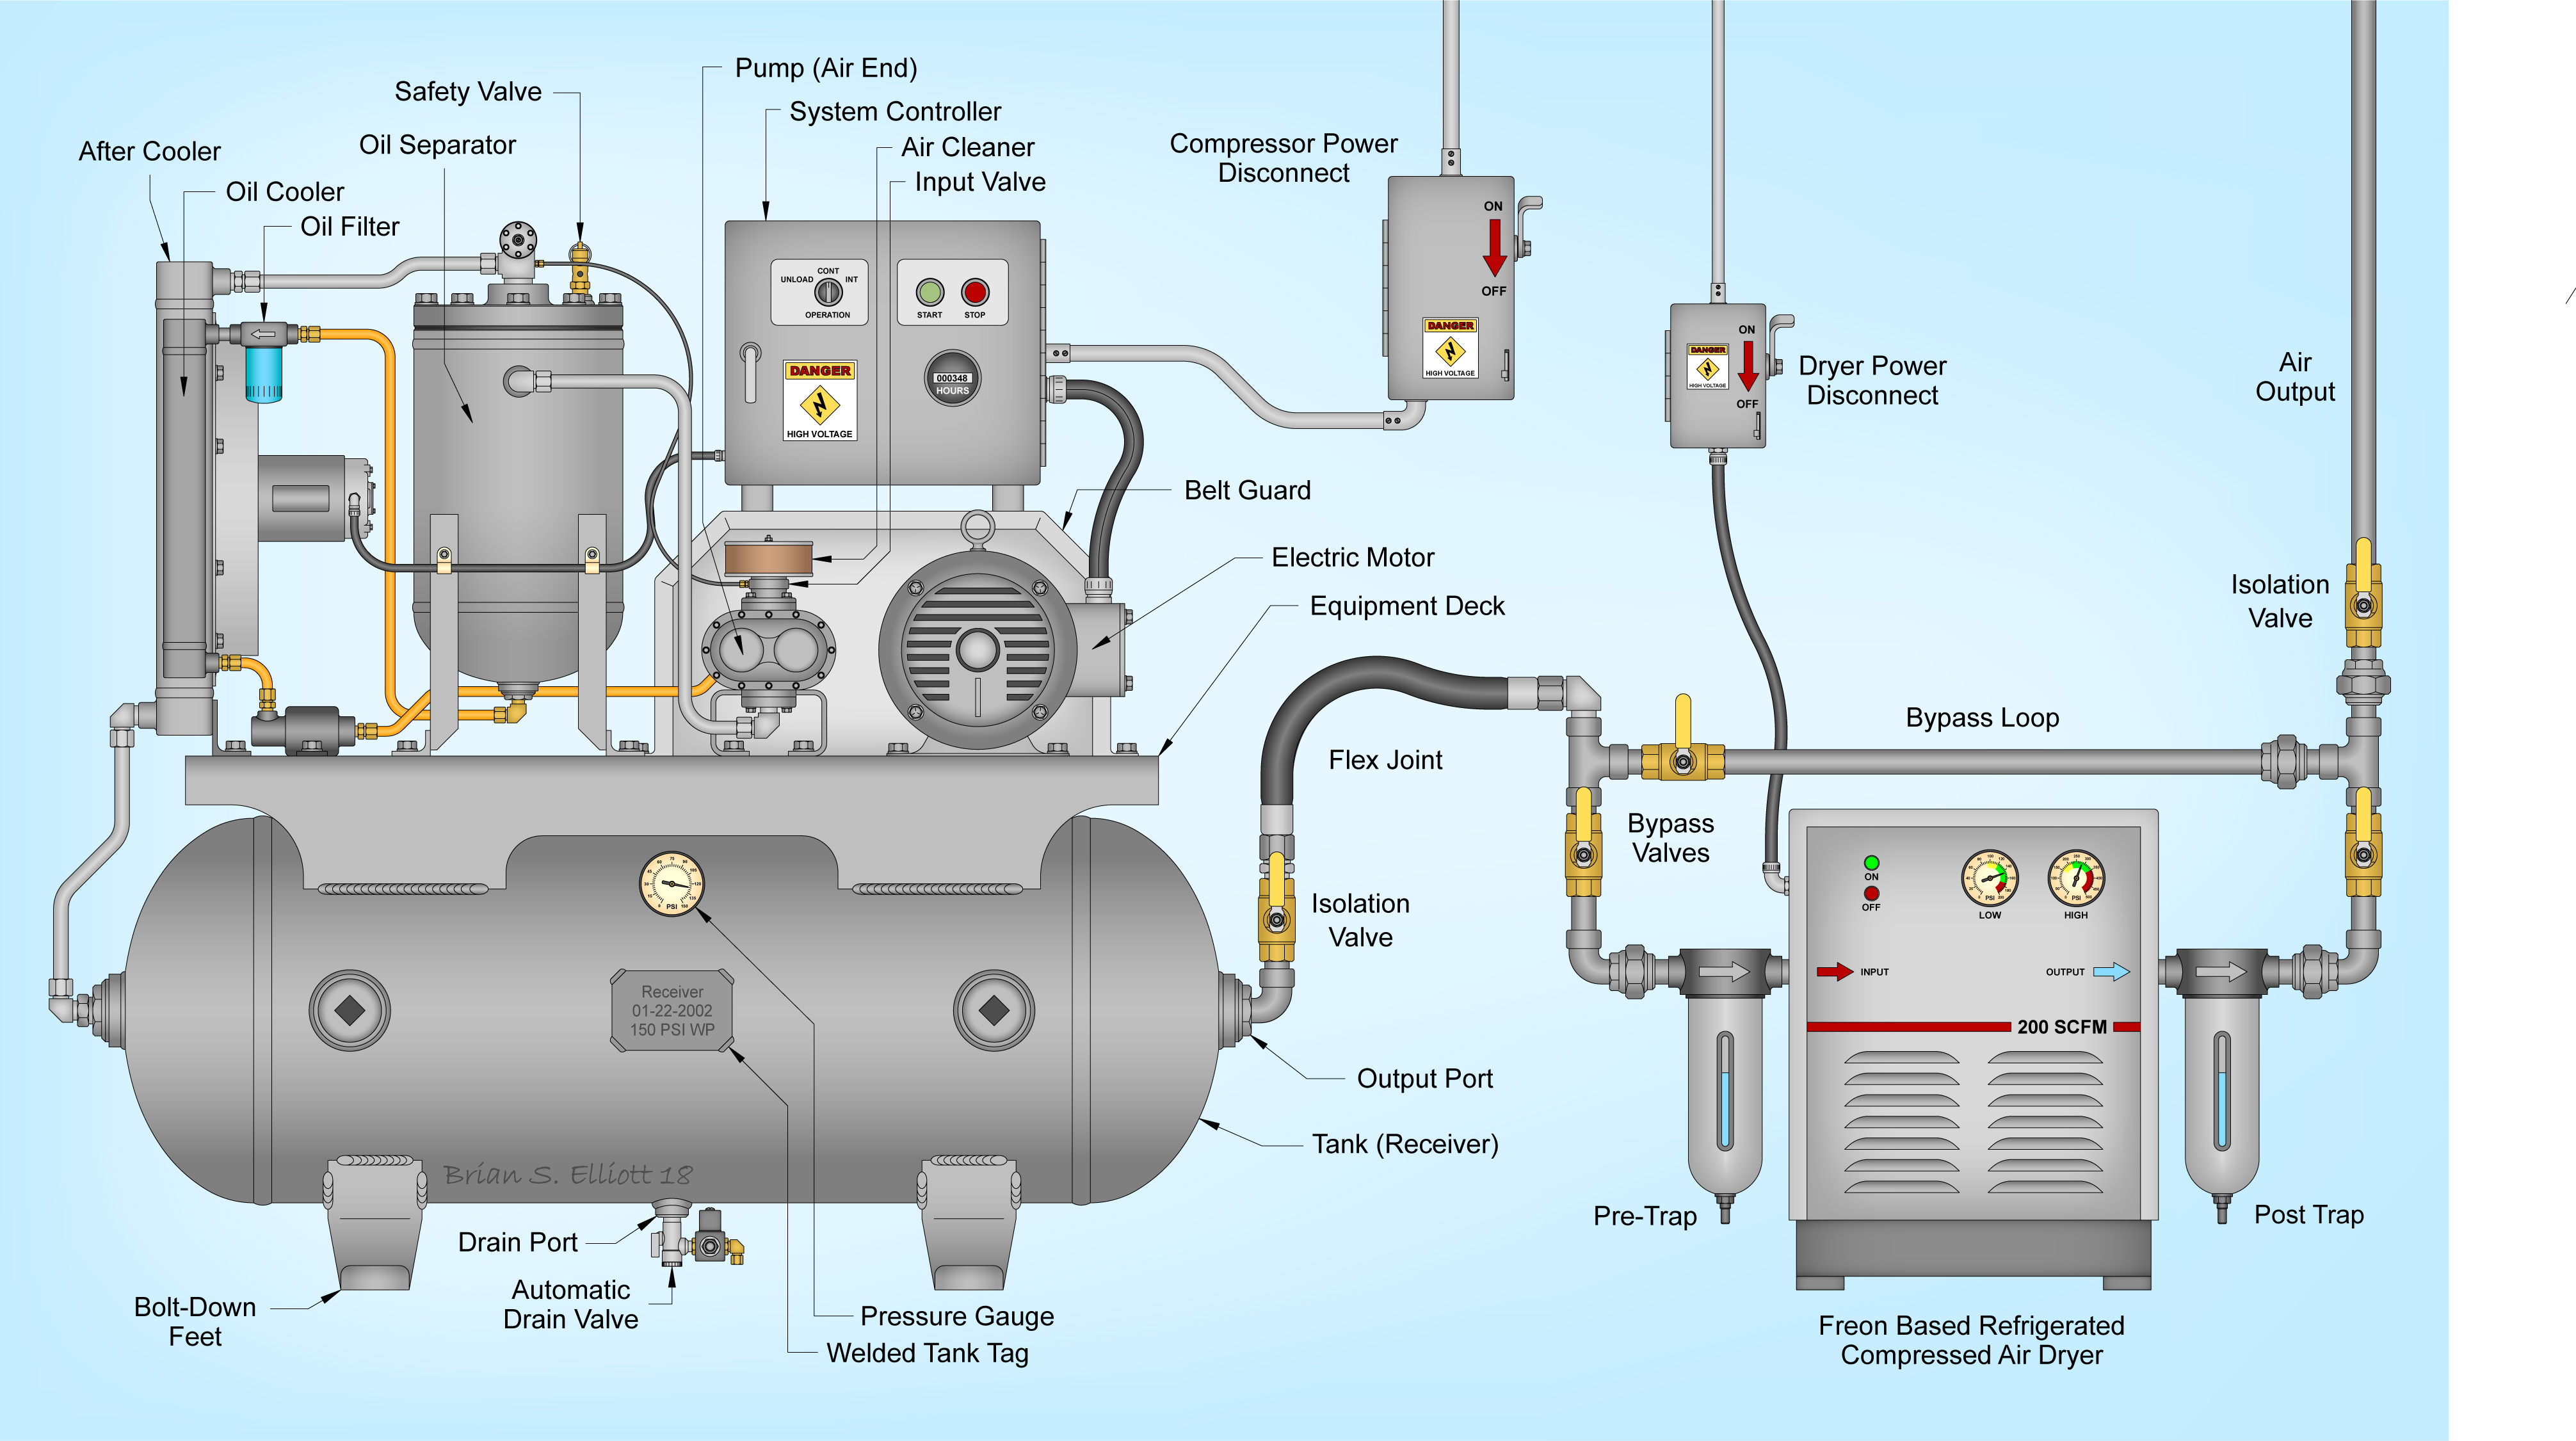 پرونده:Rotary-screw air compressor equipped with a CFC based refrigerated compressed air dryer.jpg - ویکیپدیا، دانشنامهٔ آزاد